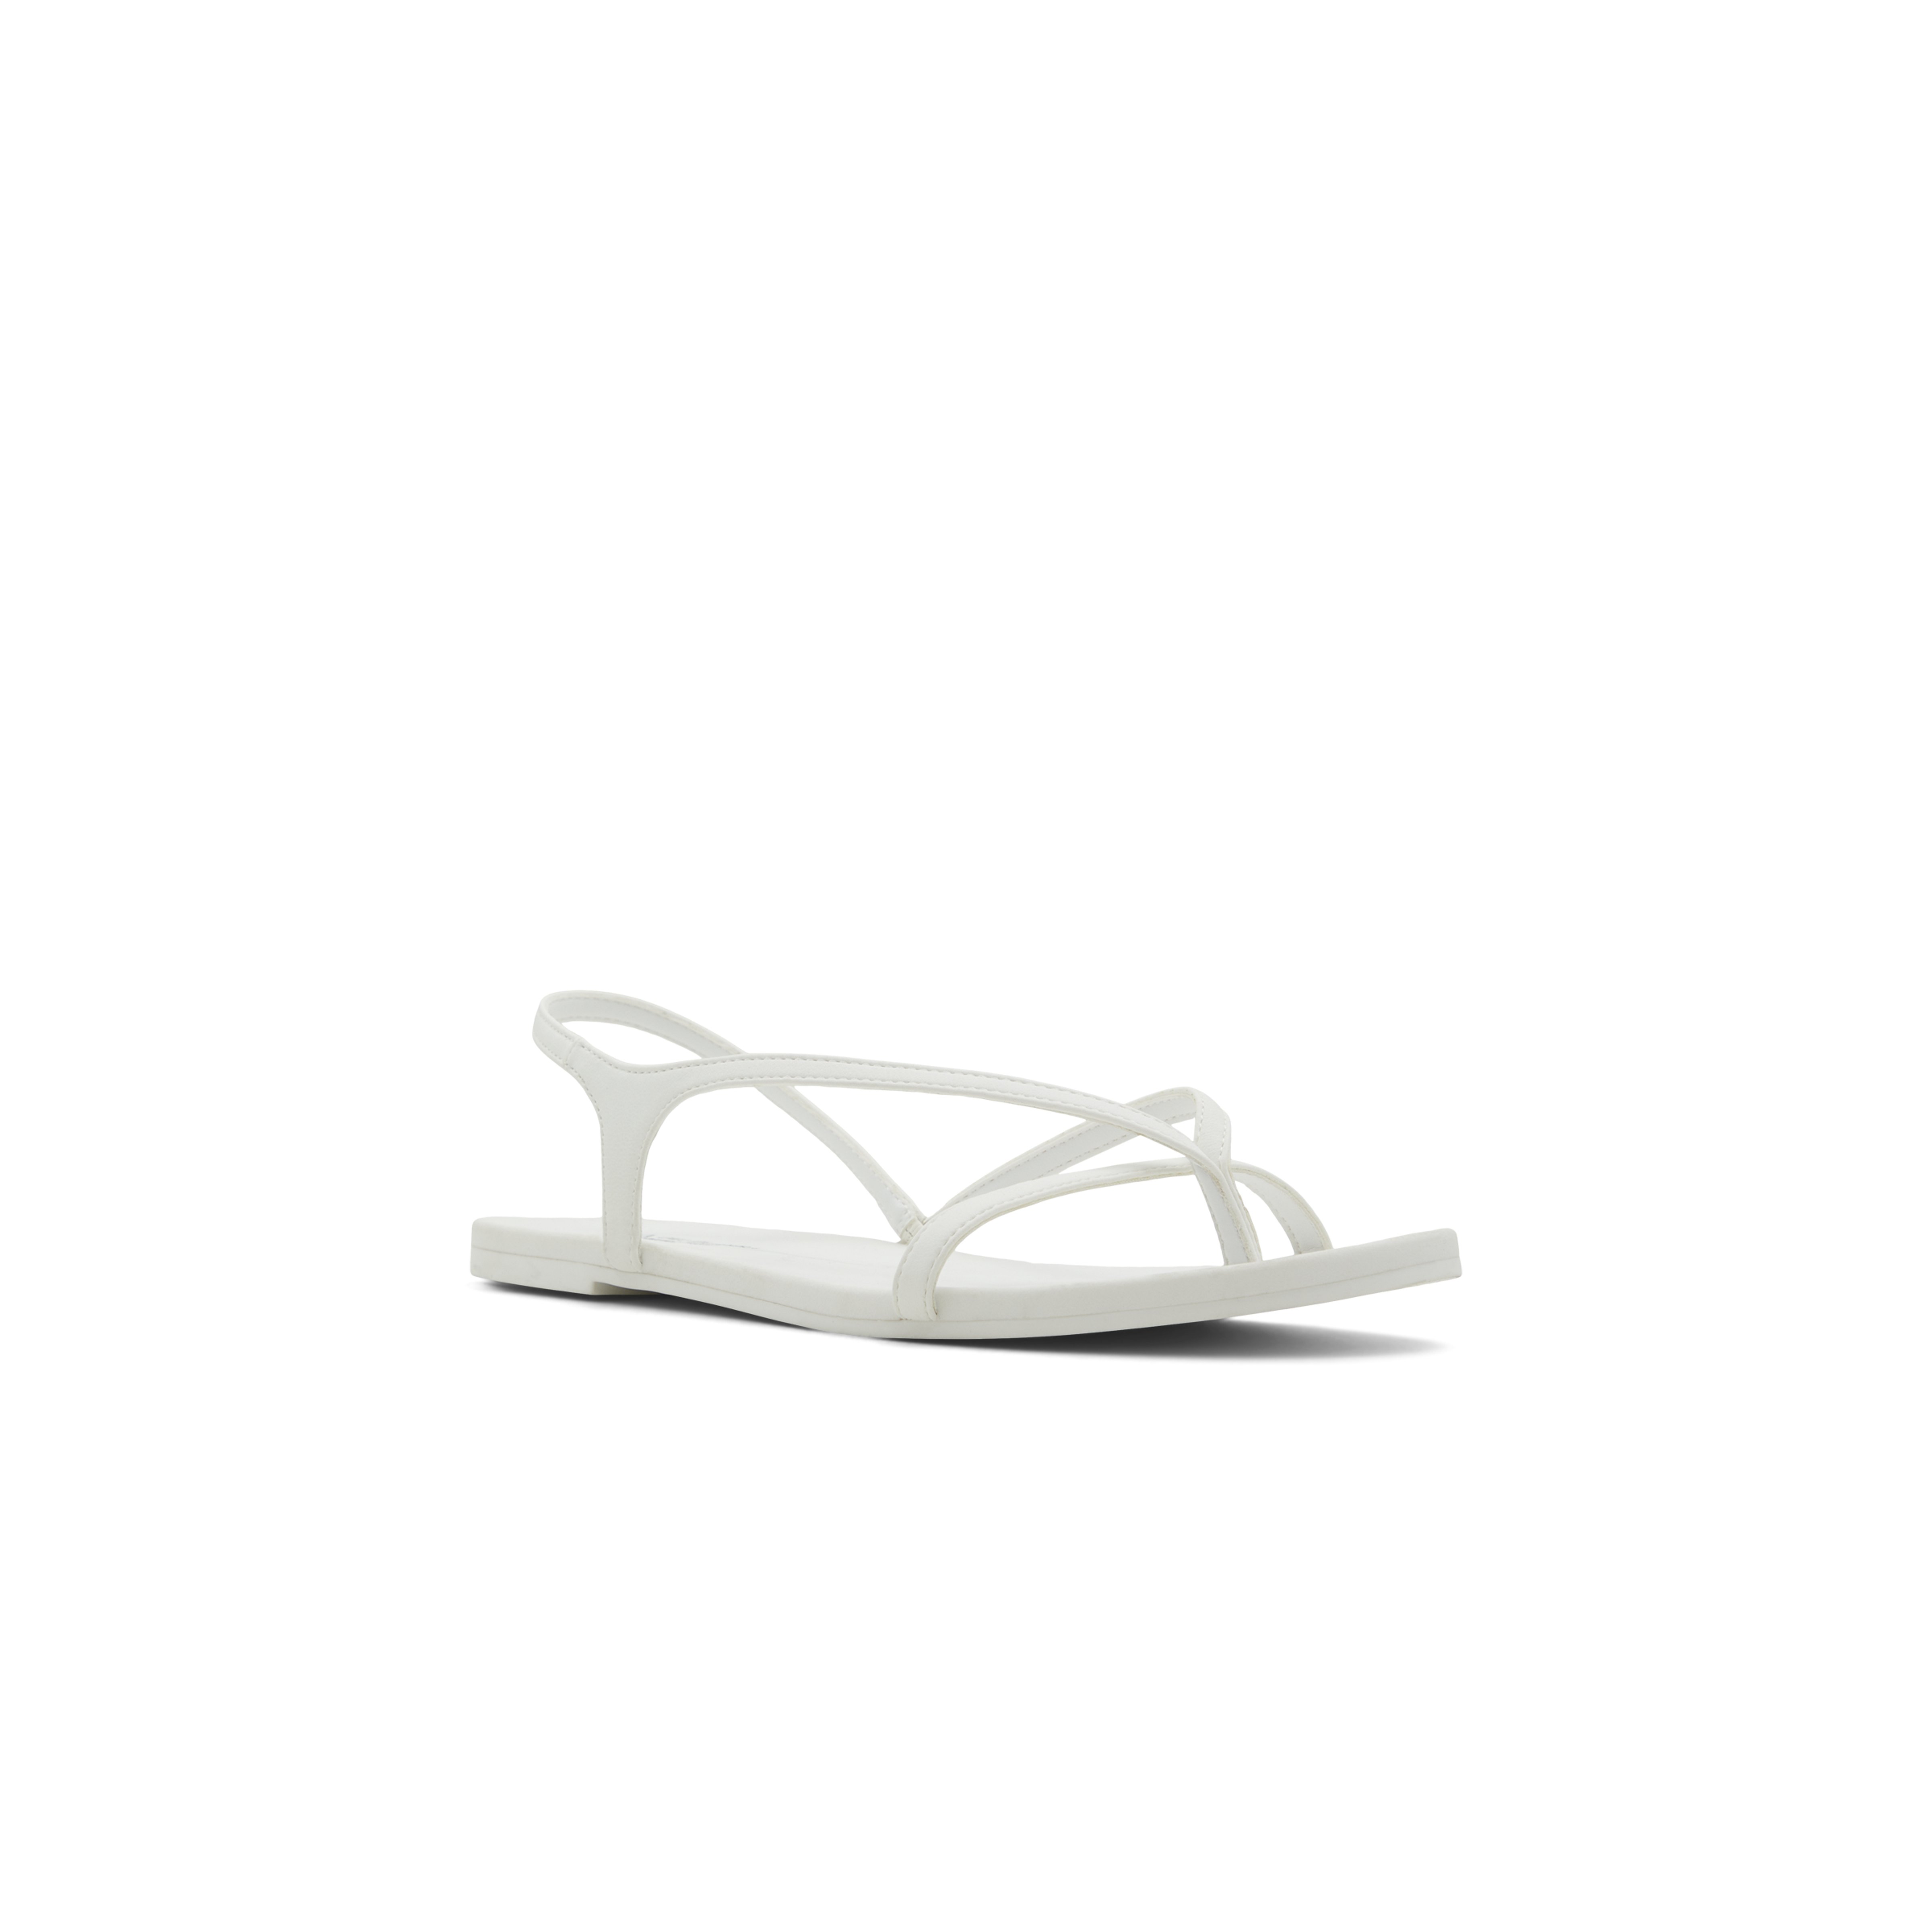 Montebello Women's White Flat Sandals image number 4